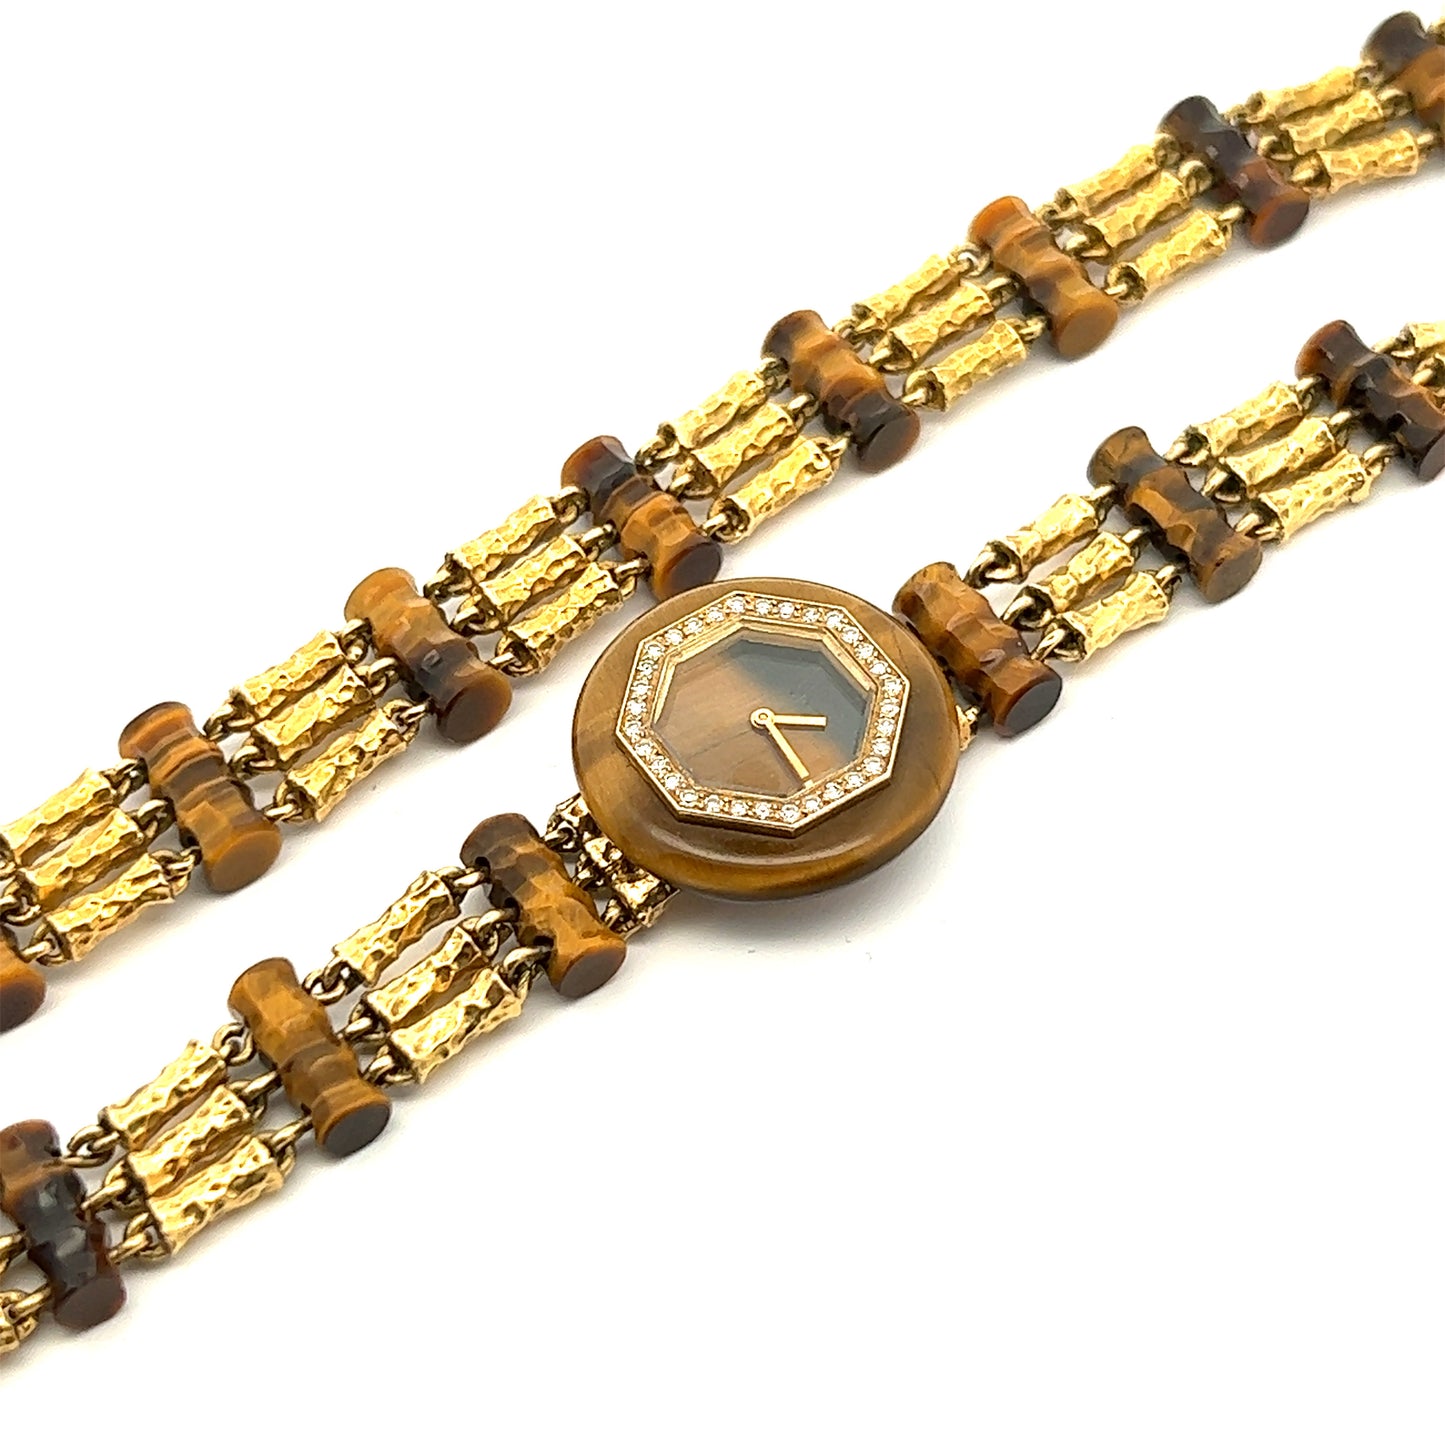 Boucheron Paris 1950s 18KT Yellow Gold Tiger's Eye & Diamond Bracelet Watch front